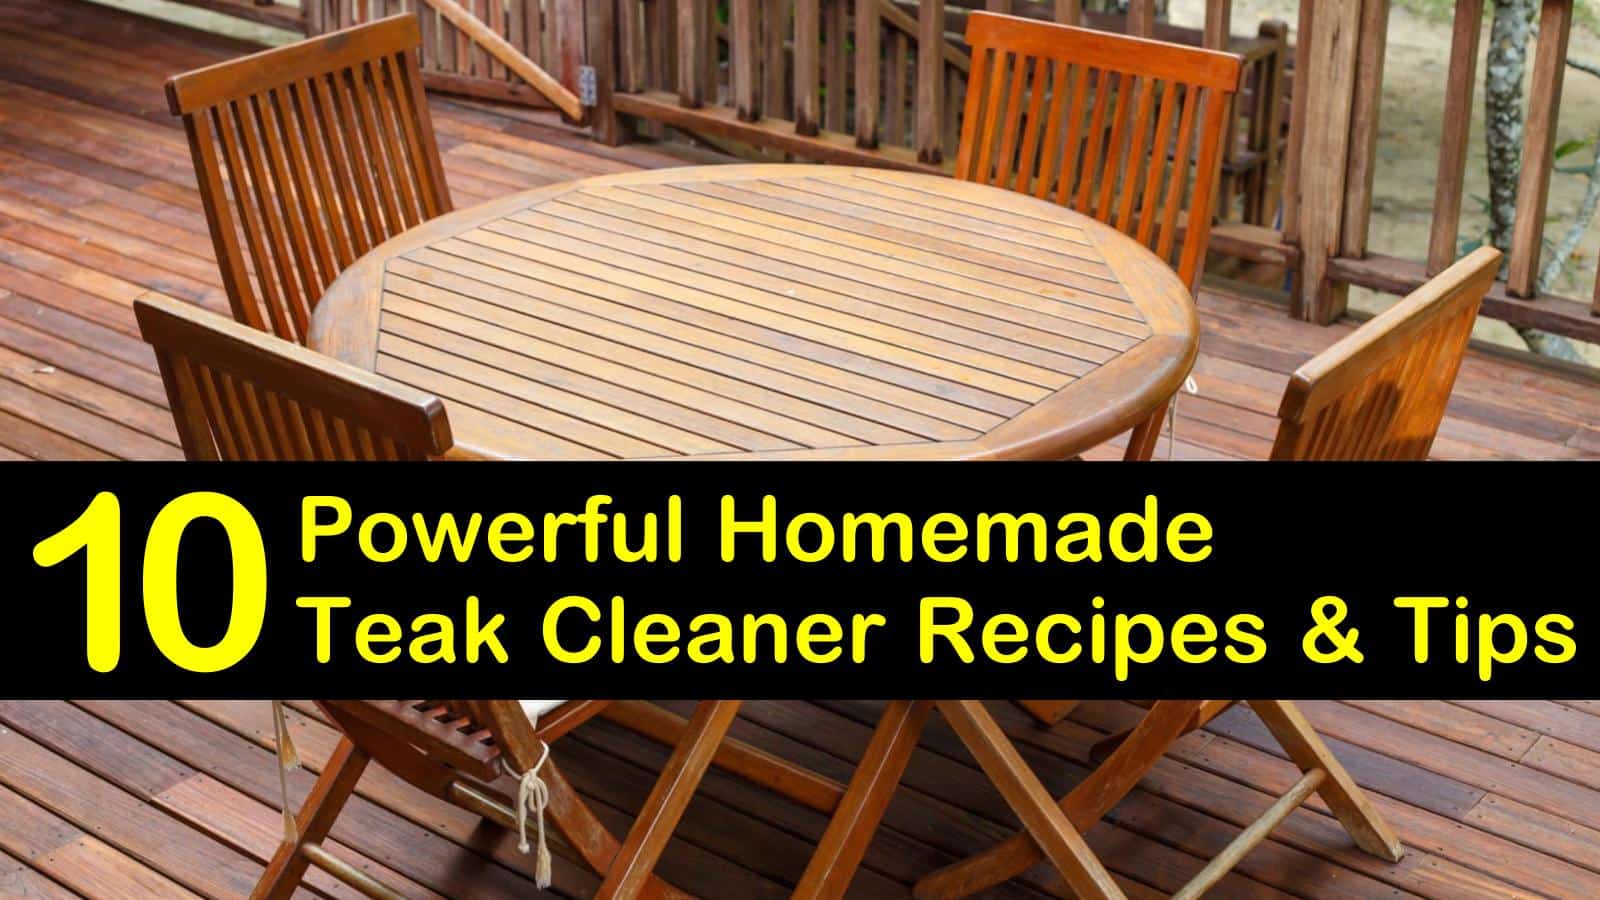 10 DIY Teak Cleaner Recipes & Tips